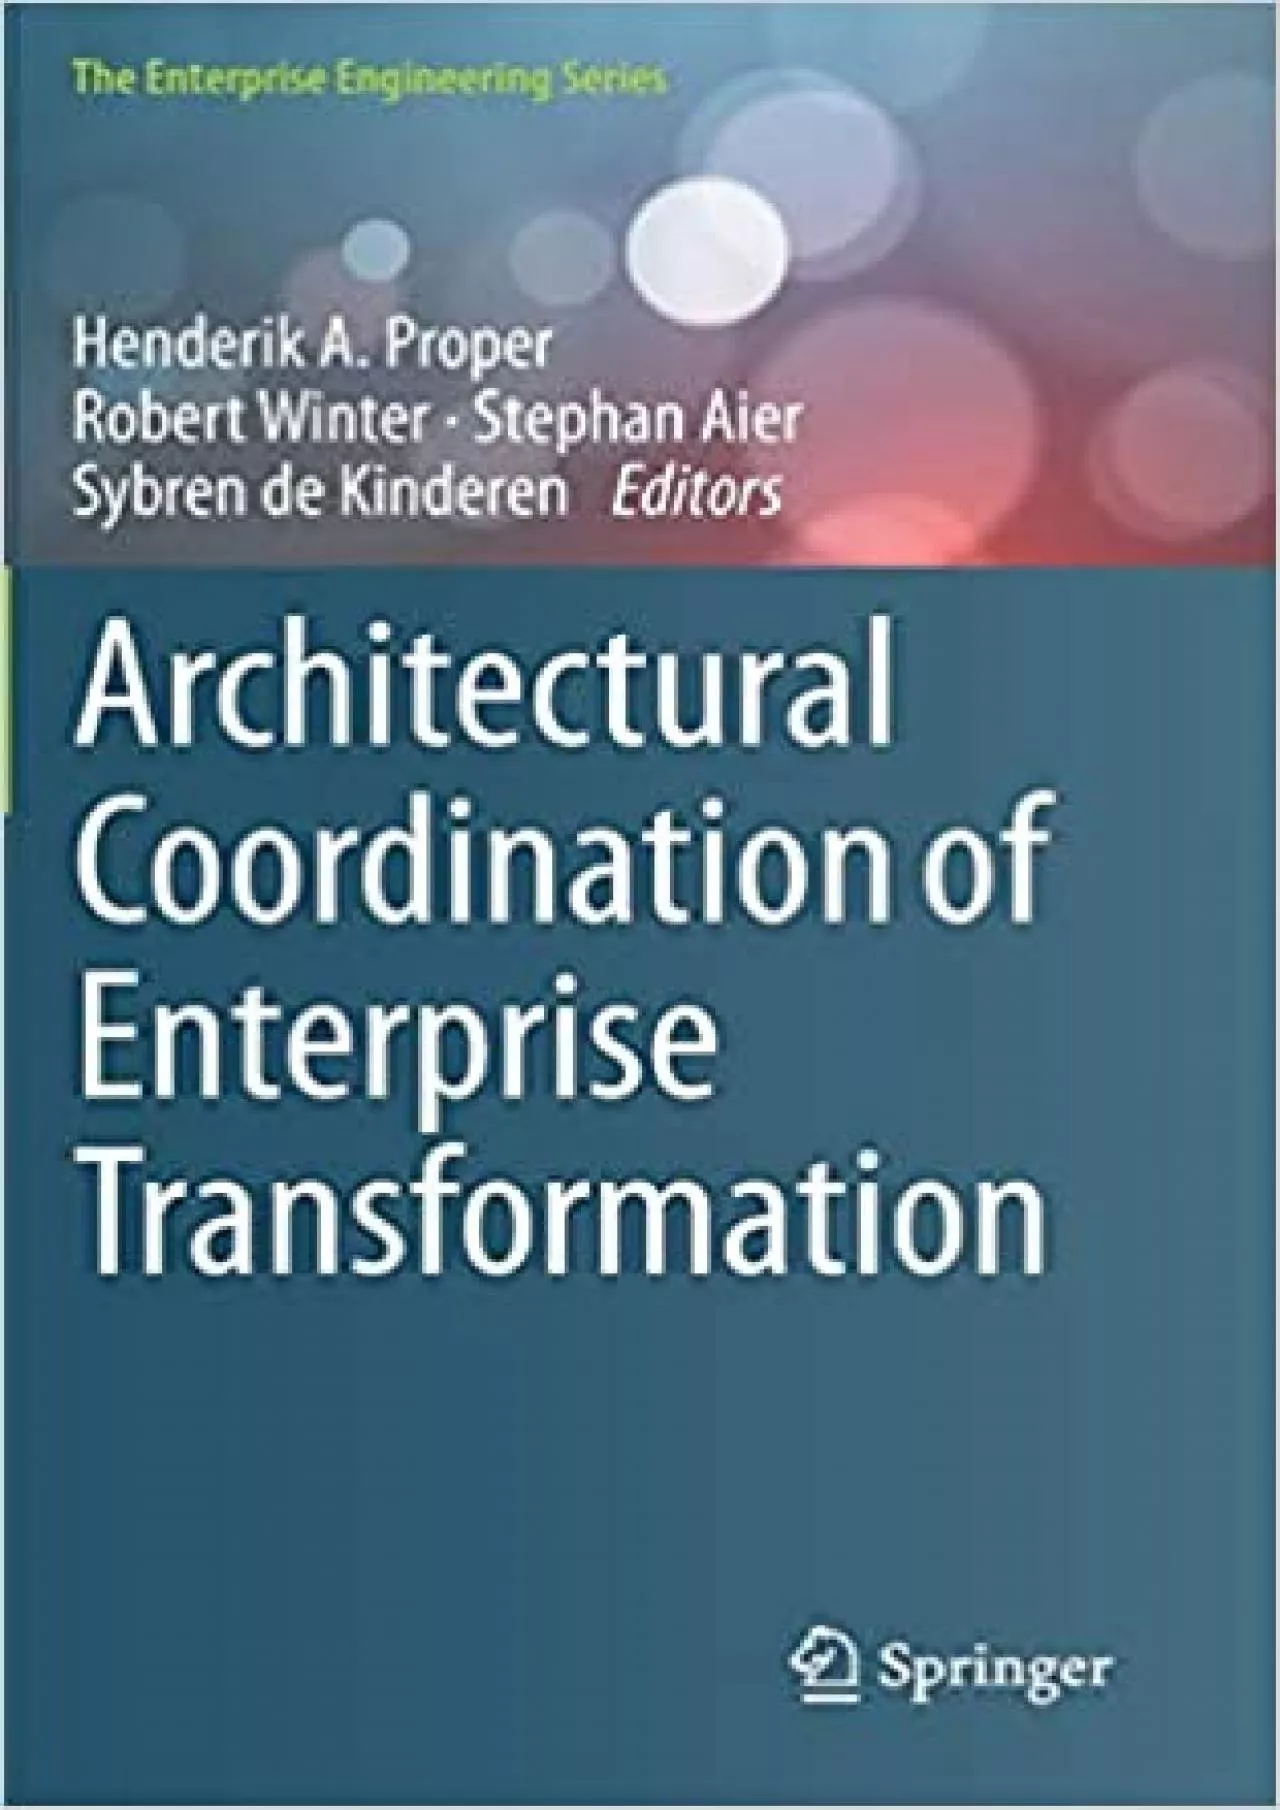 Architectural Coordination of Enterprise Transformation (The Enterprise Engineering Series)